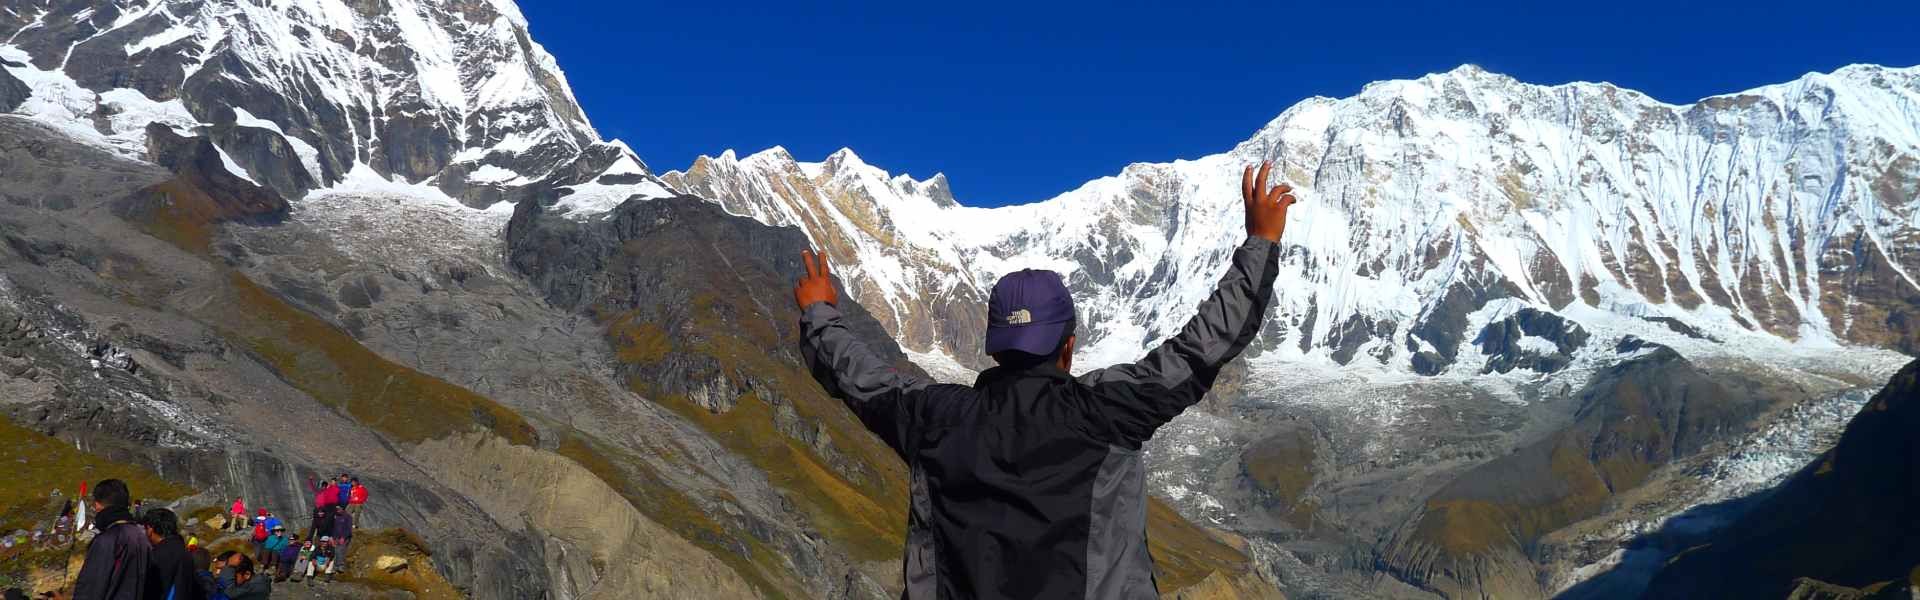 Annapurna Base Camp trek, Trekking Planner Inc.